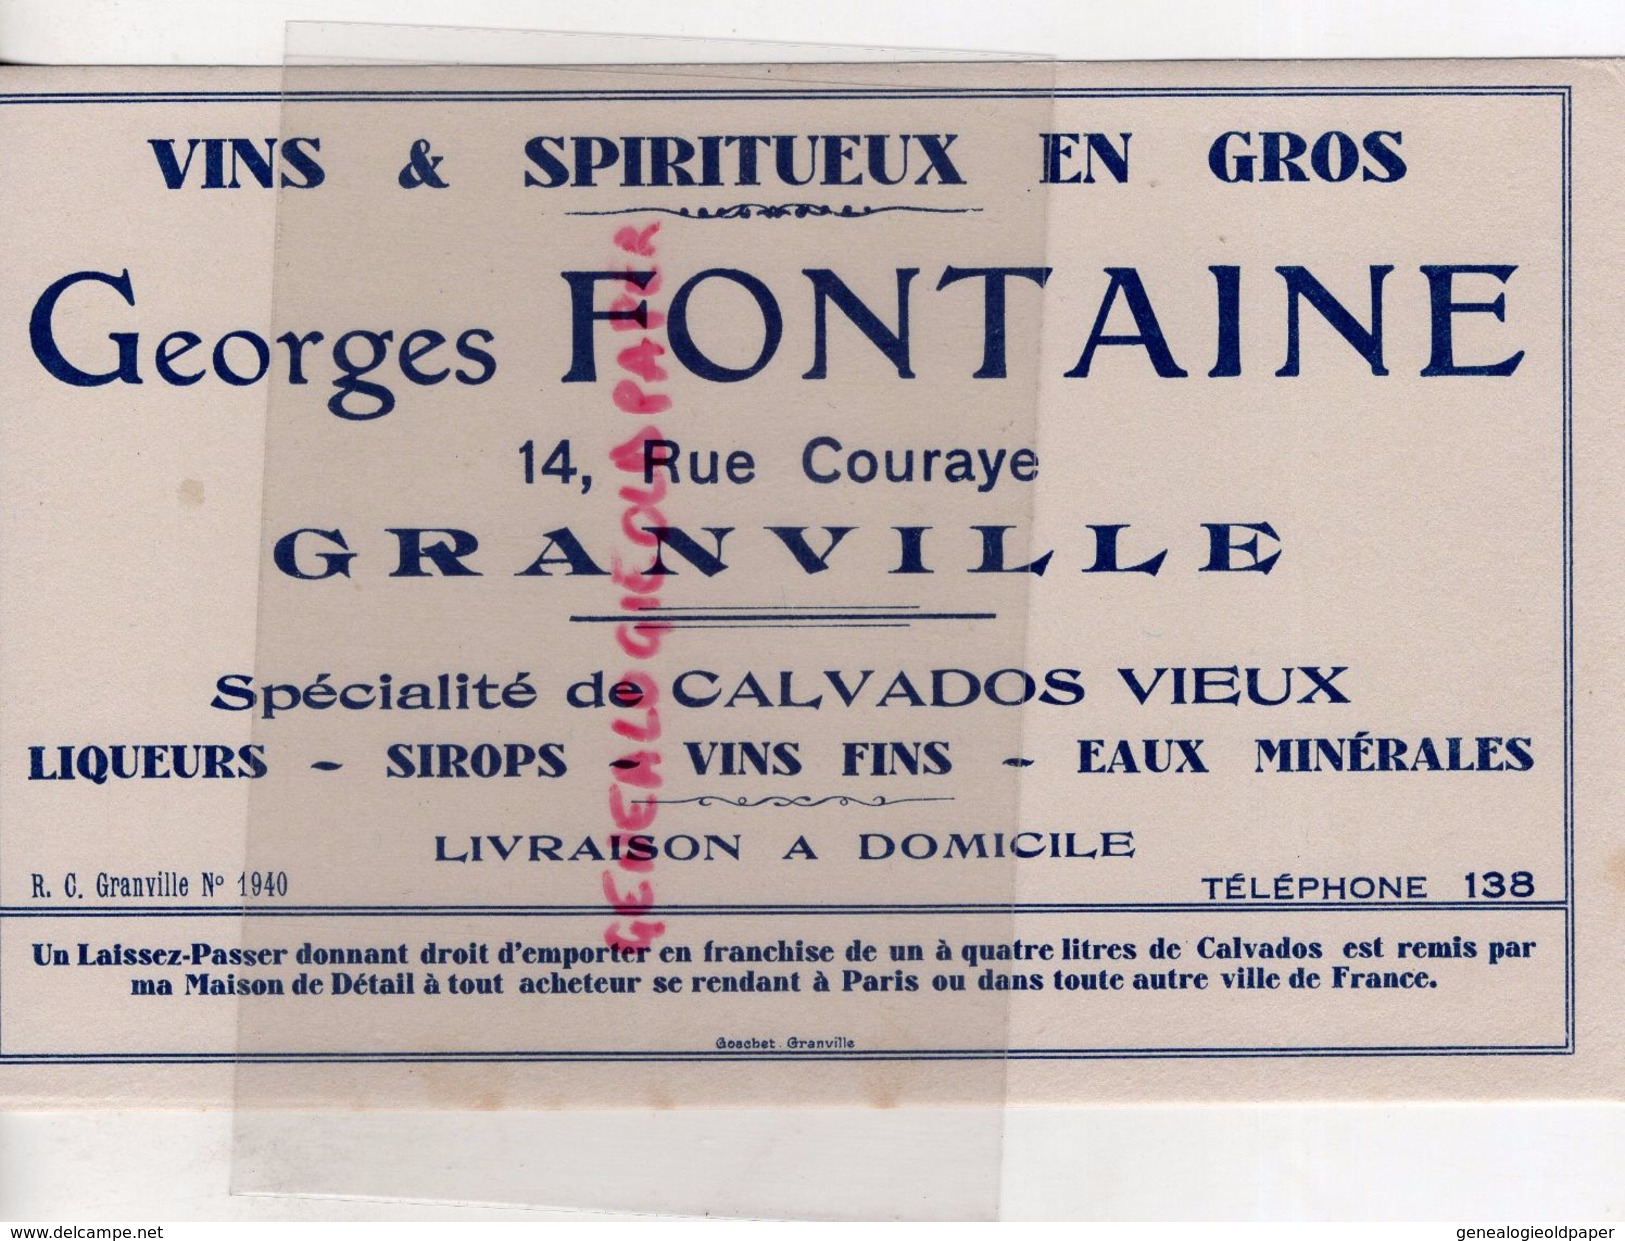 50- GRANVILLE- BUVARD GEORGES FONTAINE-VINS SPIRITUEUX-14 RUE COURAYE- CALVADOS - Food